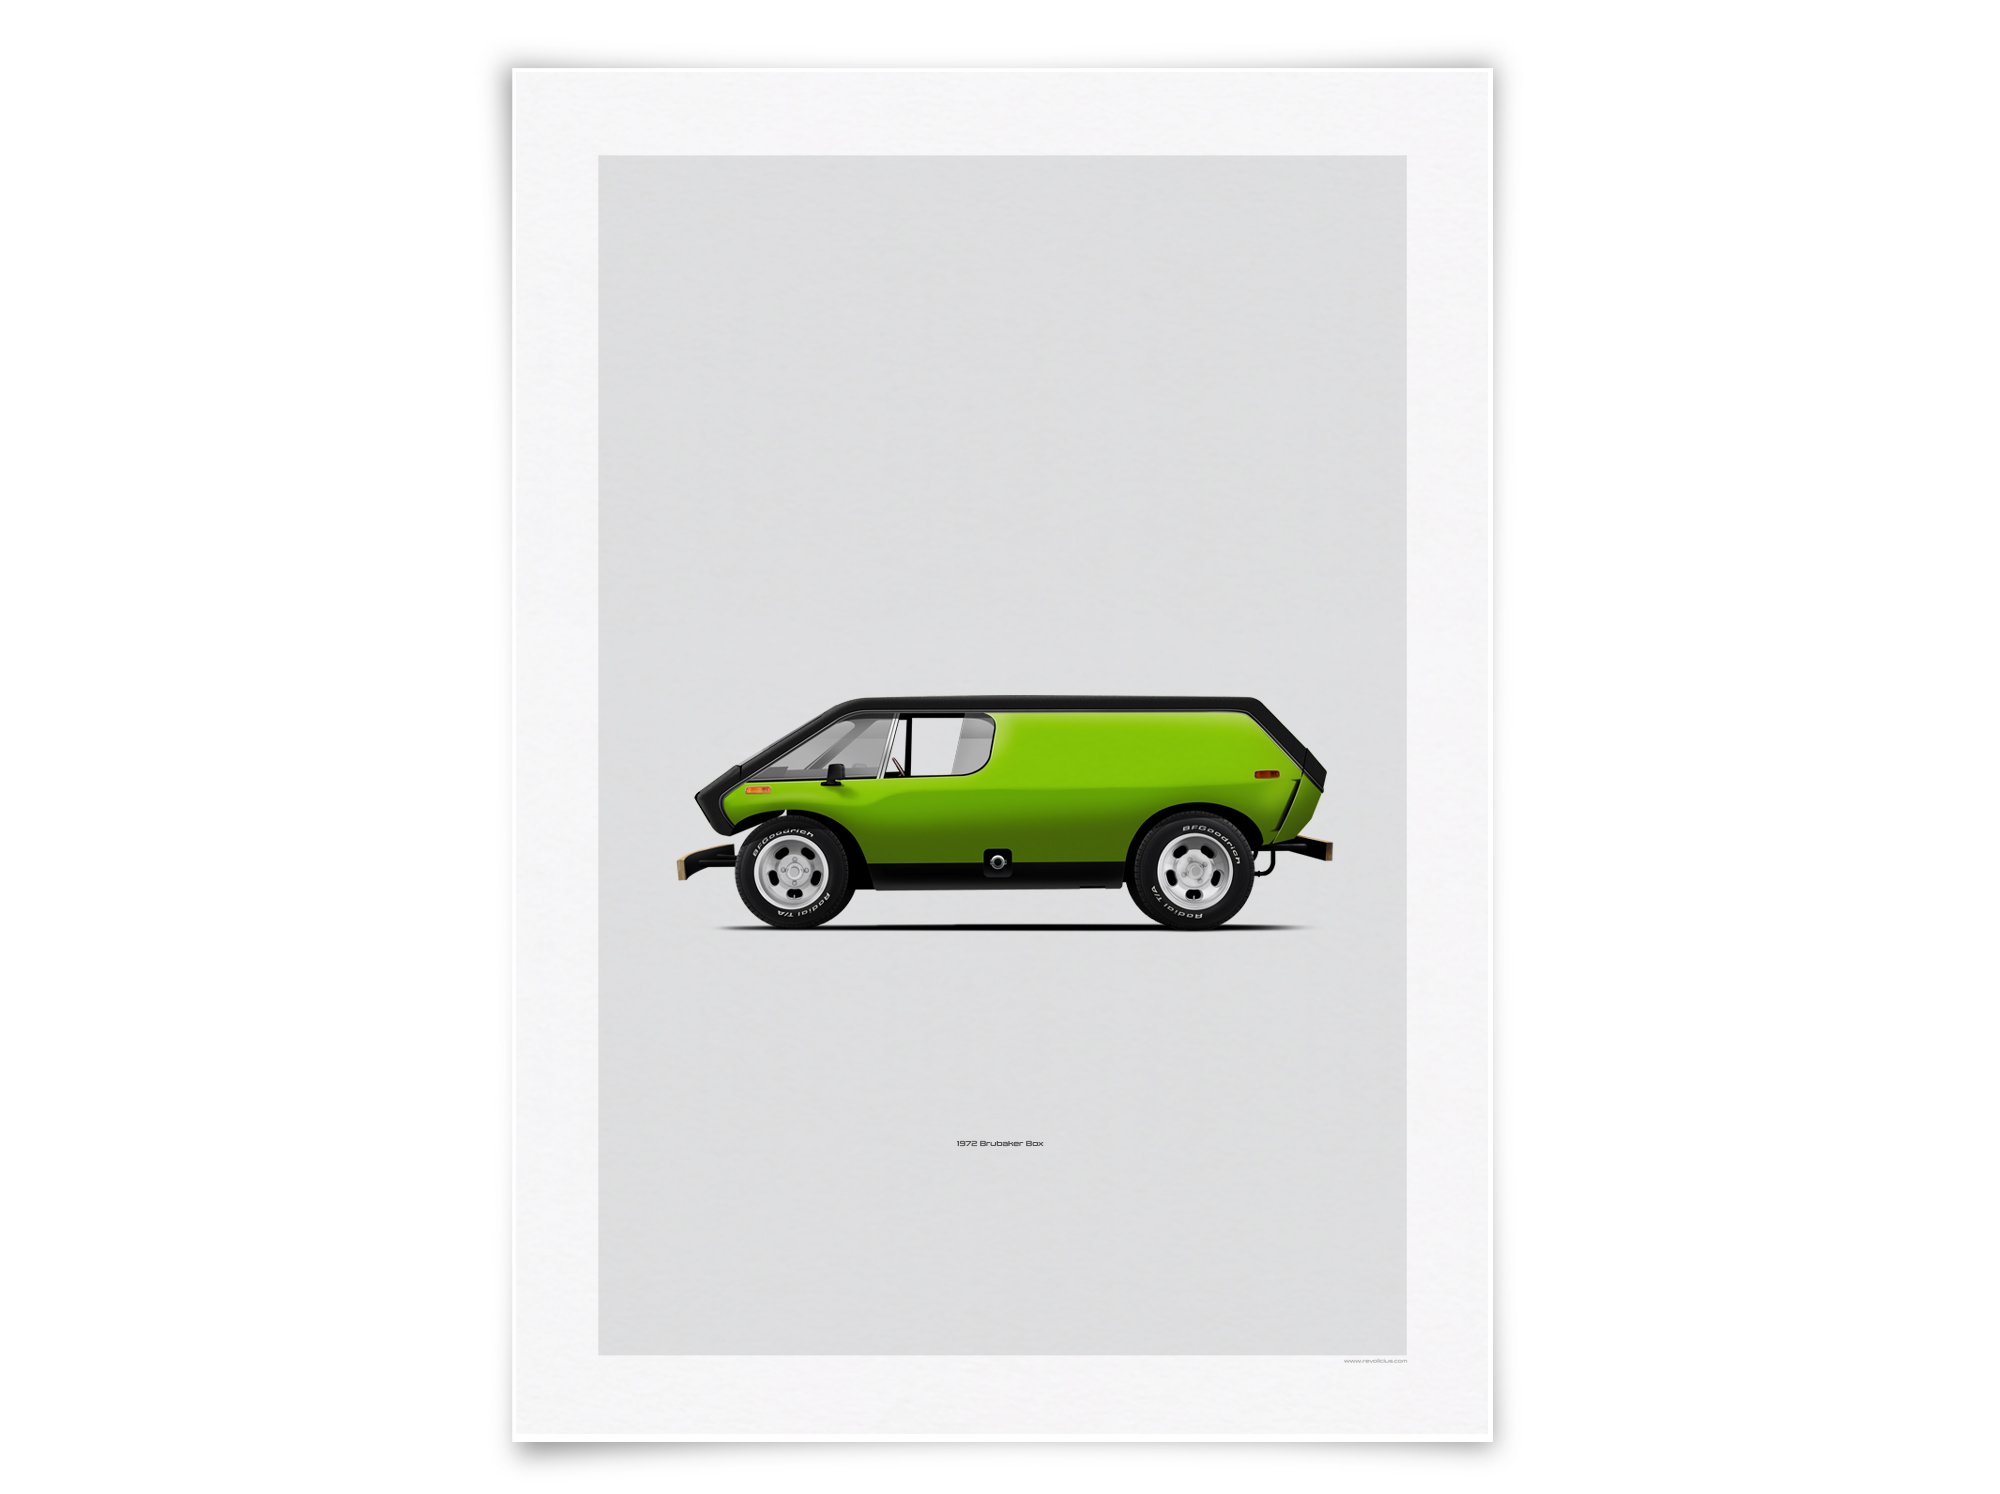 1972 Brubaker Box - Car poster, car illustration, car print